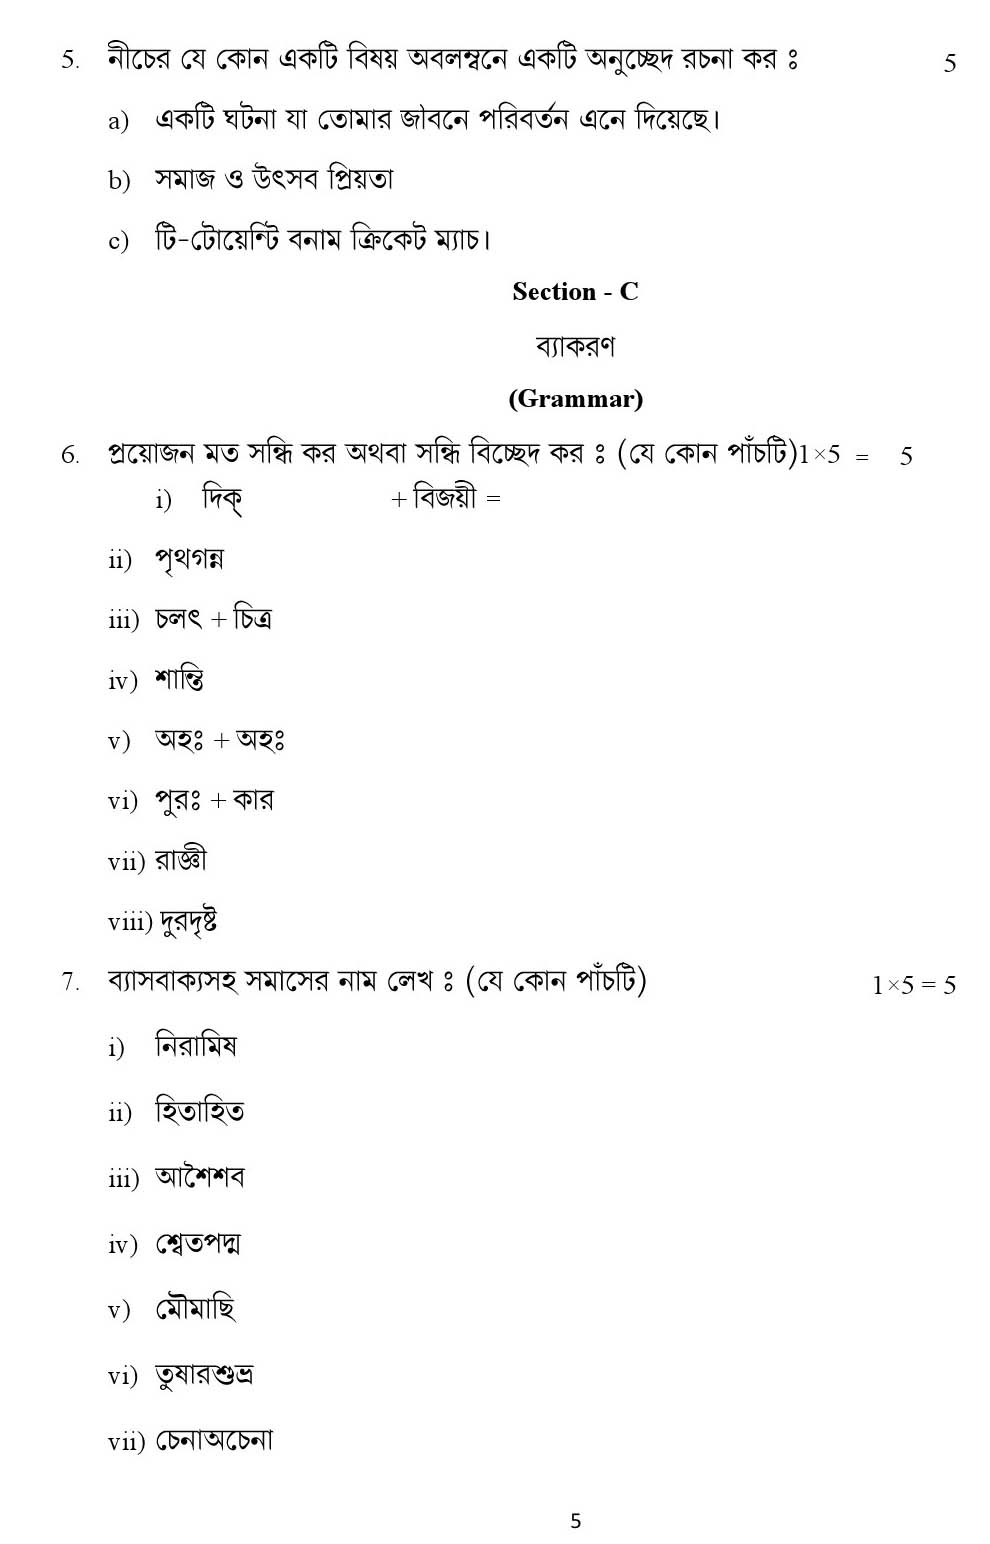 Bengali CBSE Class X Sample Question Paper 2018-19 - Image 5